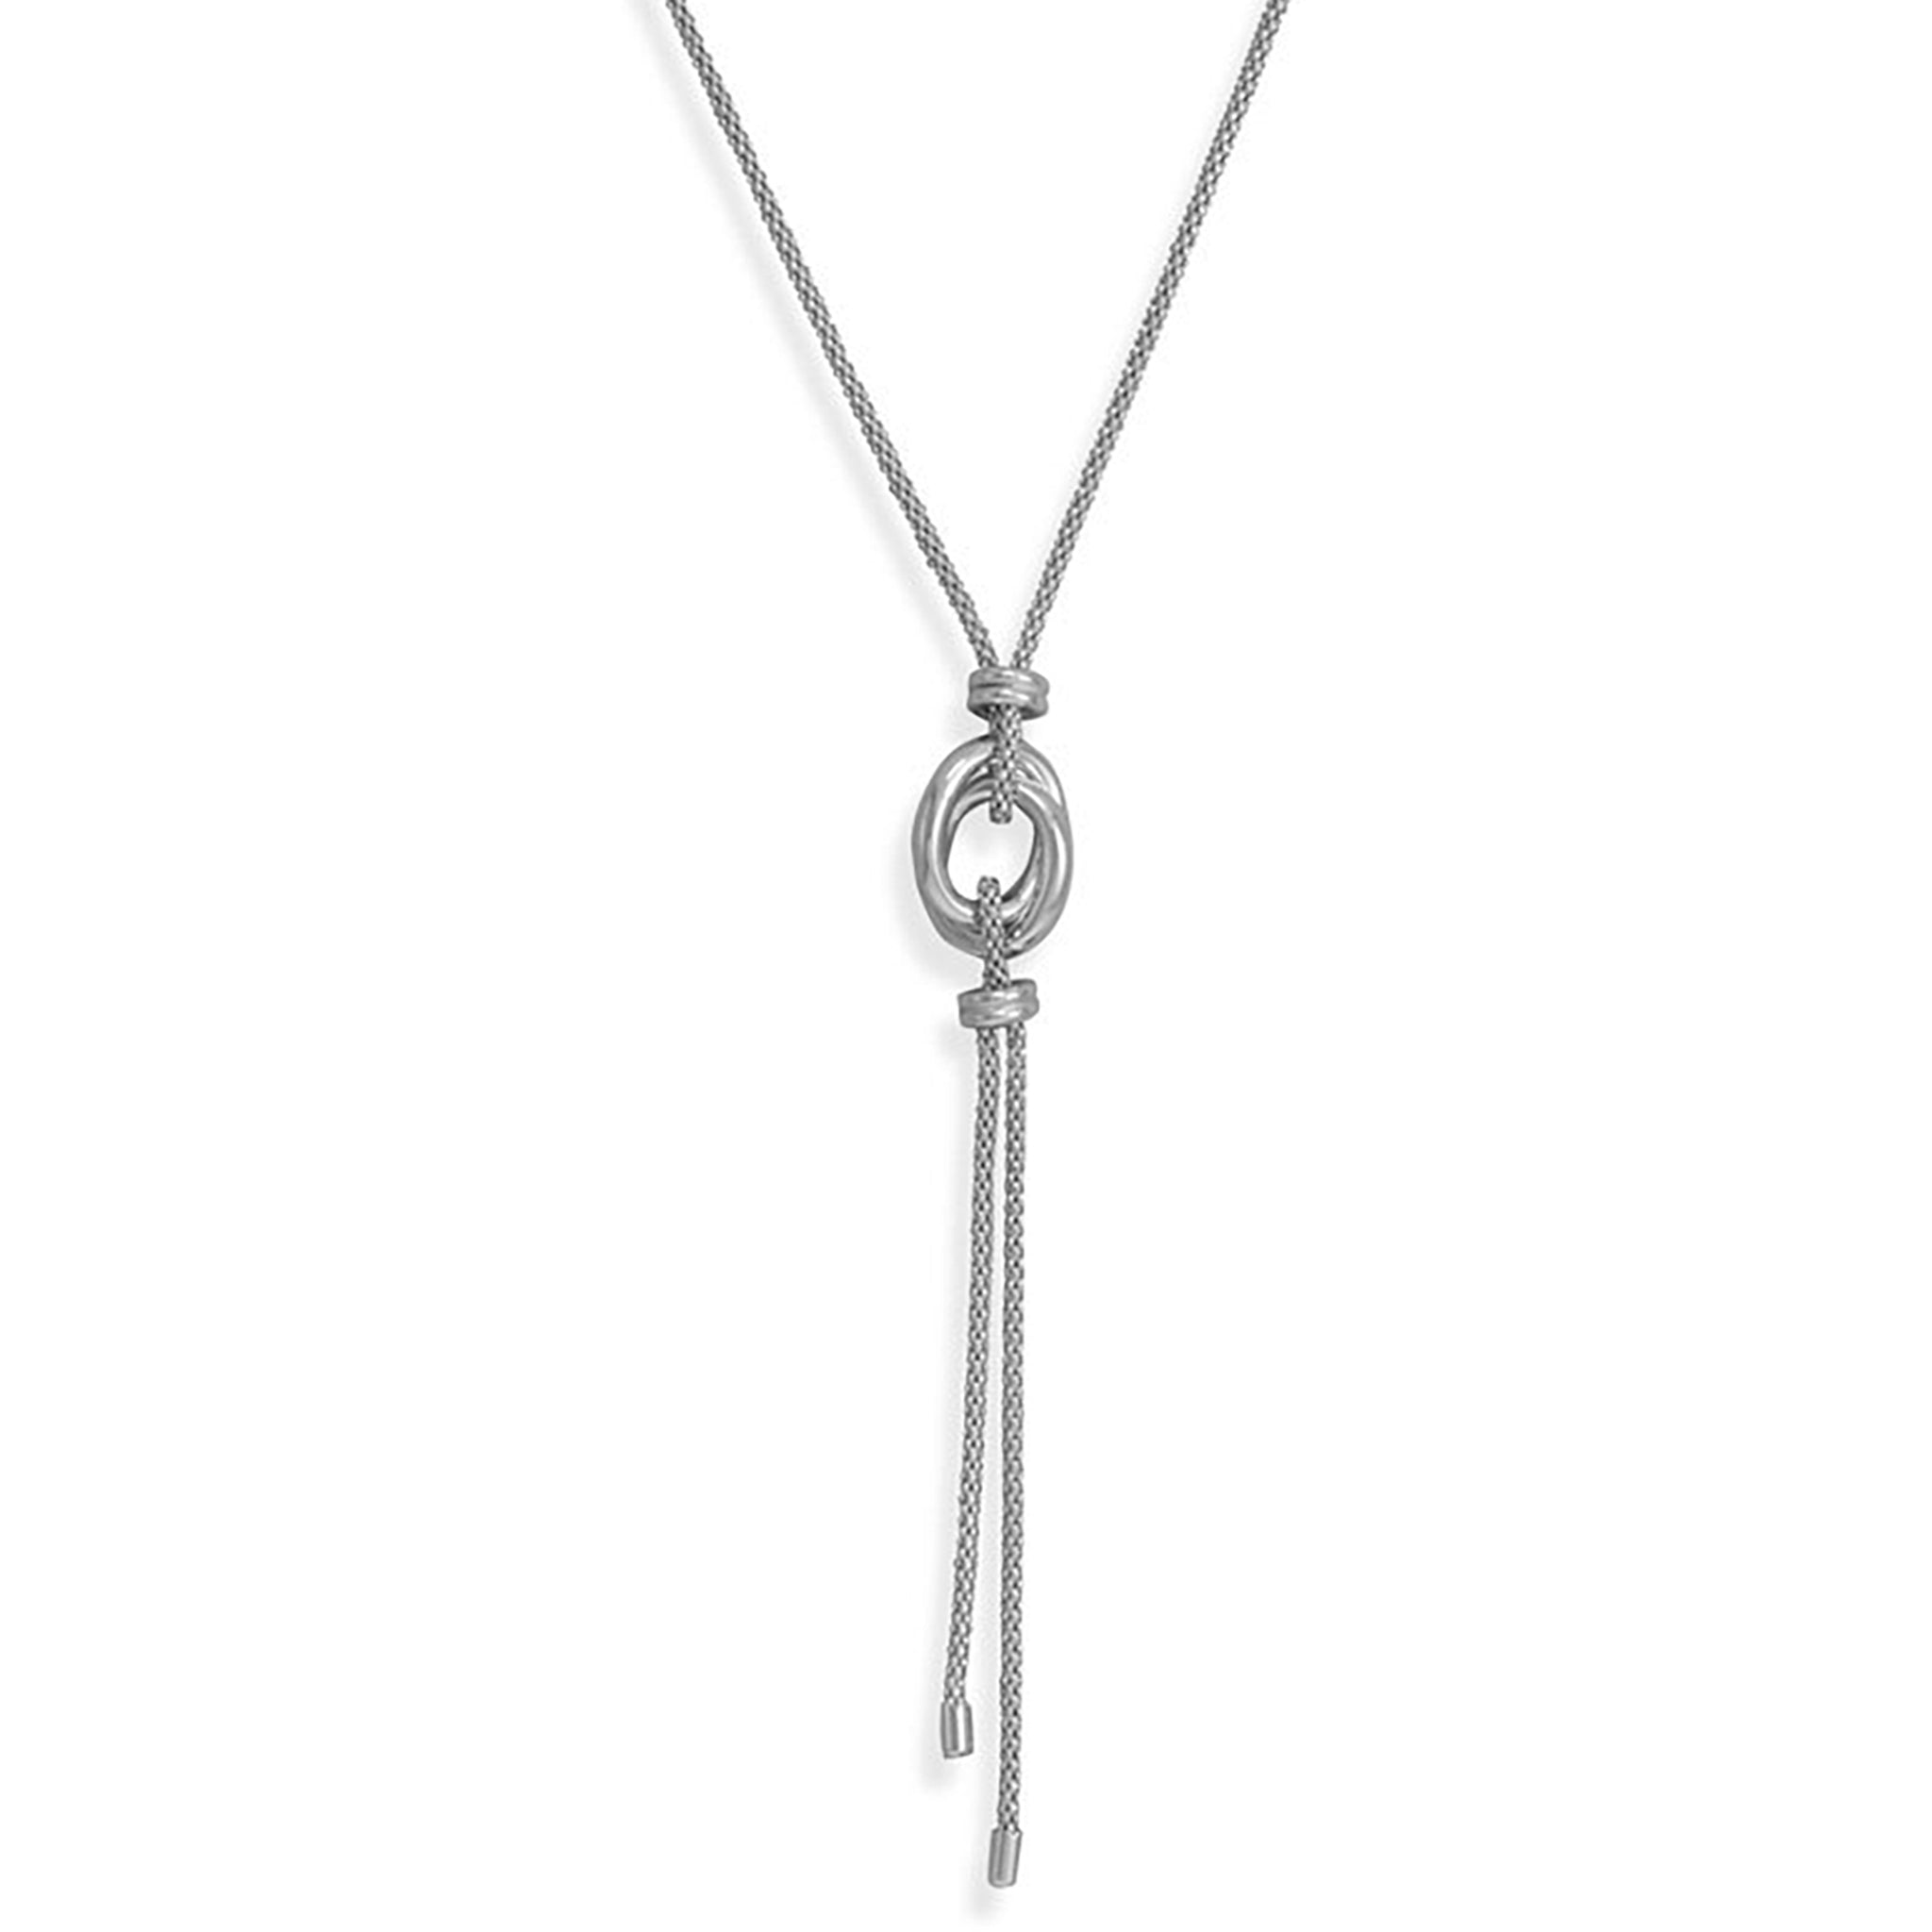 Coreana Chain Lariat Necklace